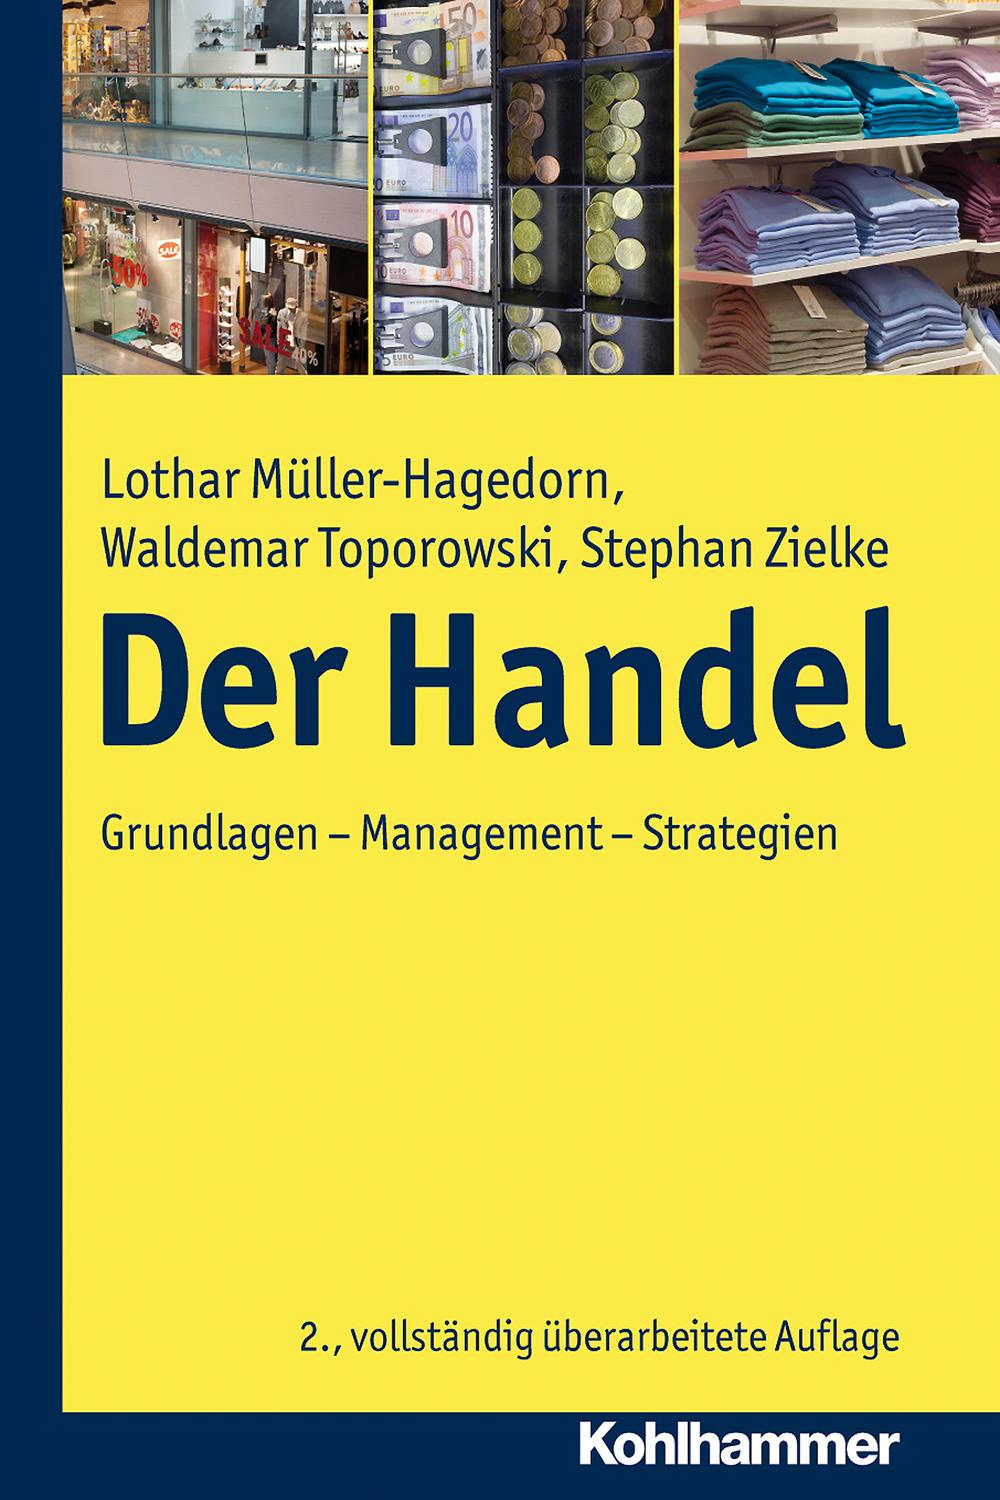 Der Handel - Lothar M?ller-Hagedorn, Waldemar Toporowski, Stephan Zielke,,